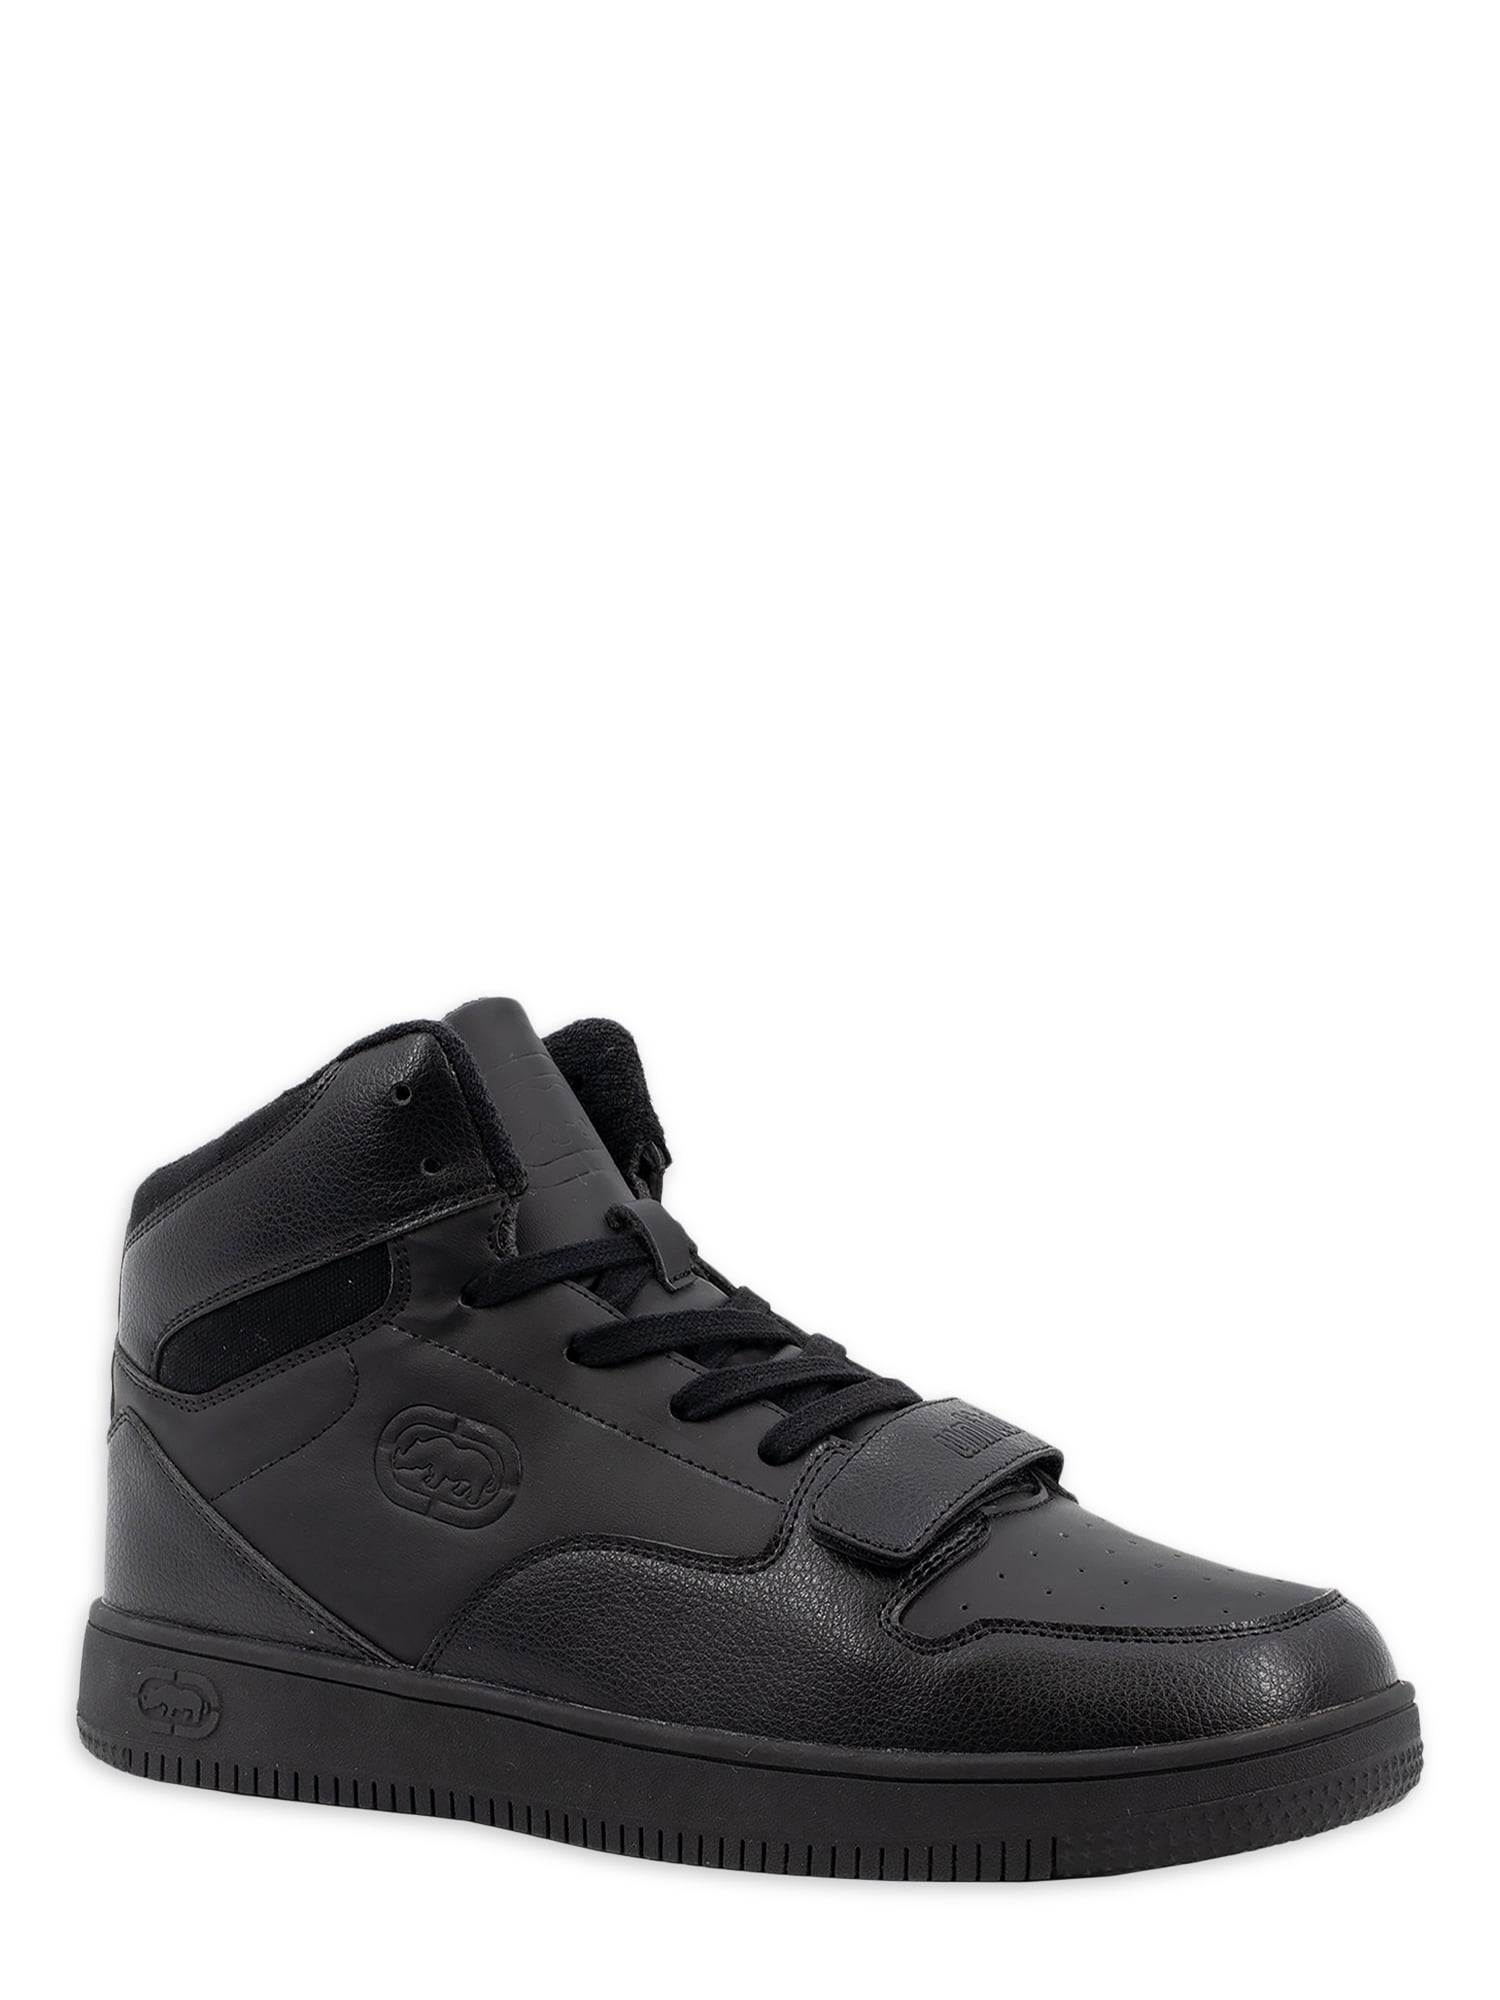 Ecko Unltd. Men's Kingston High Top Sneakers, Sizes 8-13 - Walmart.com